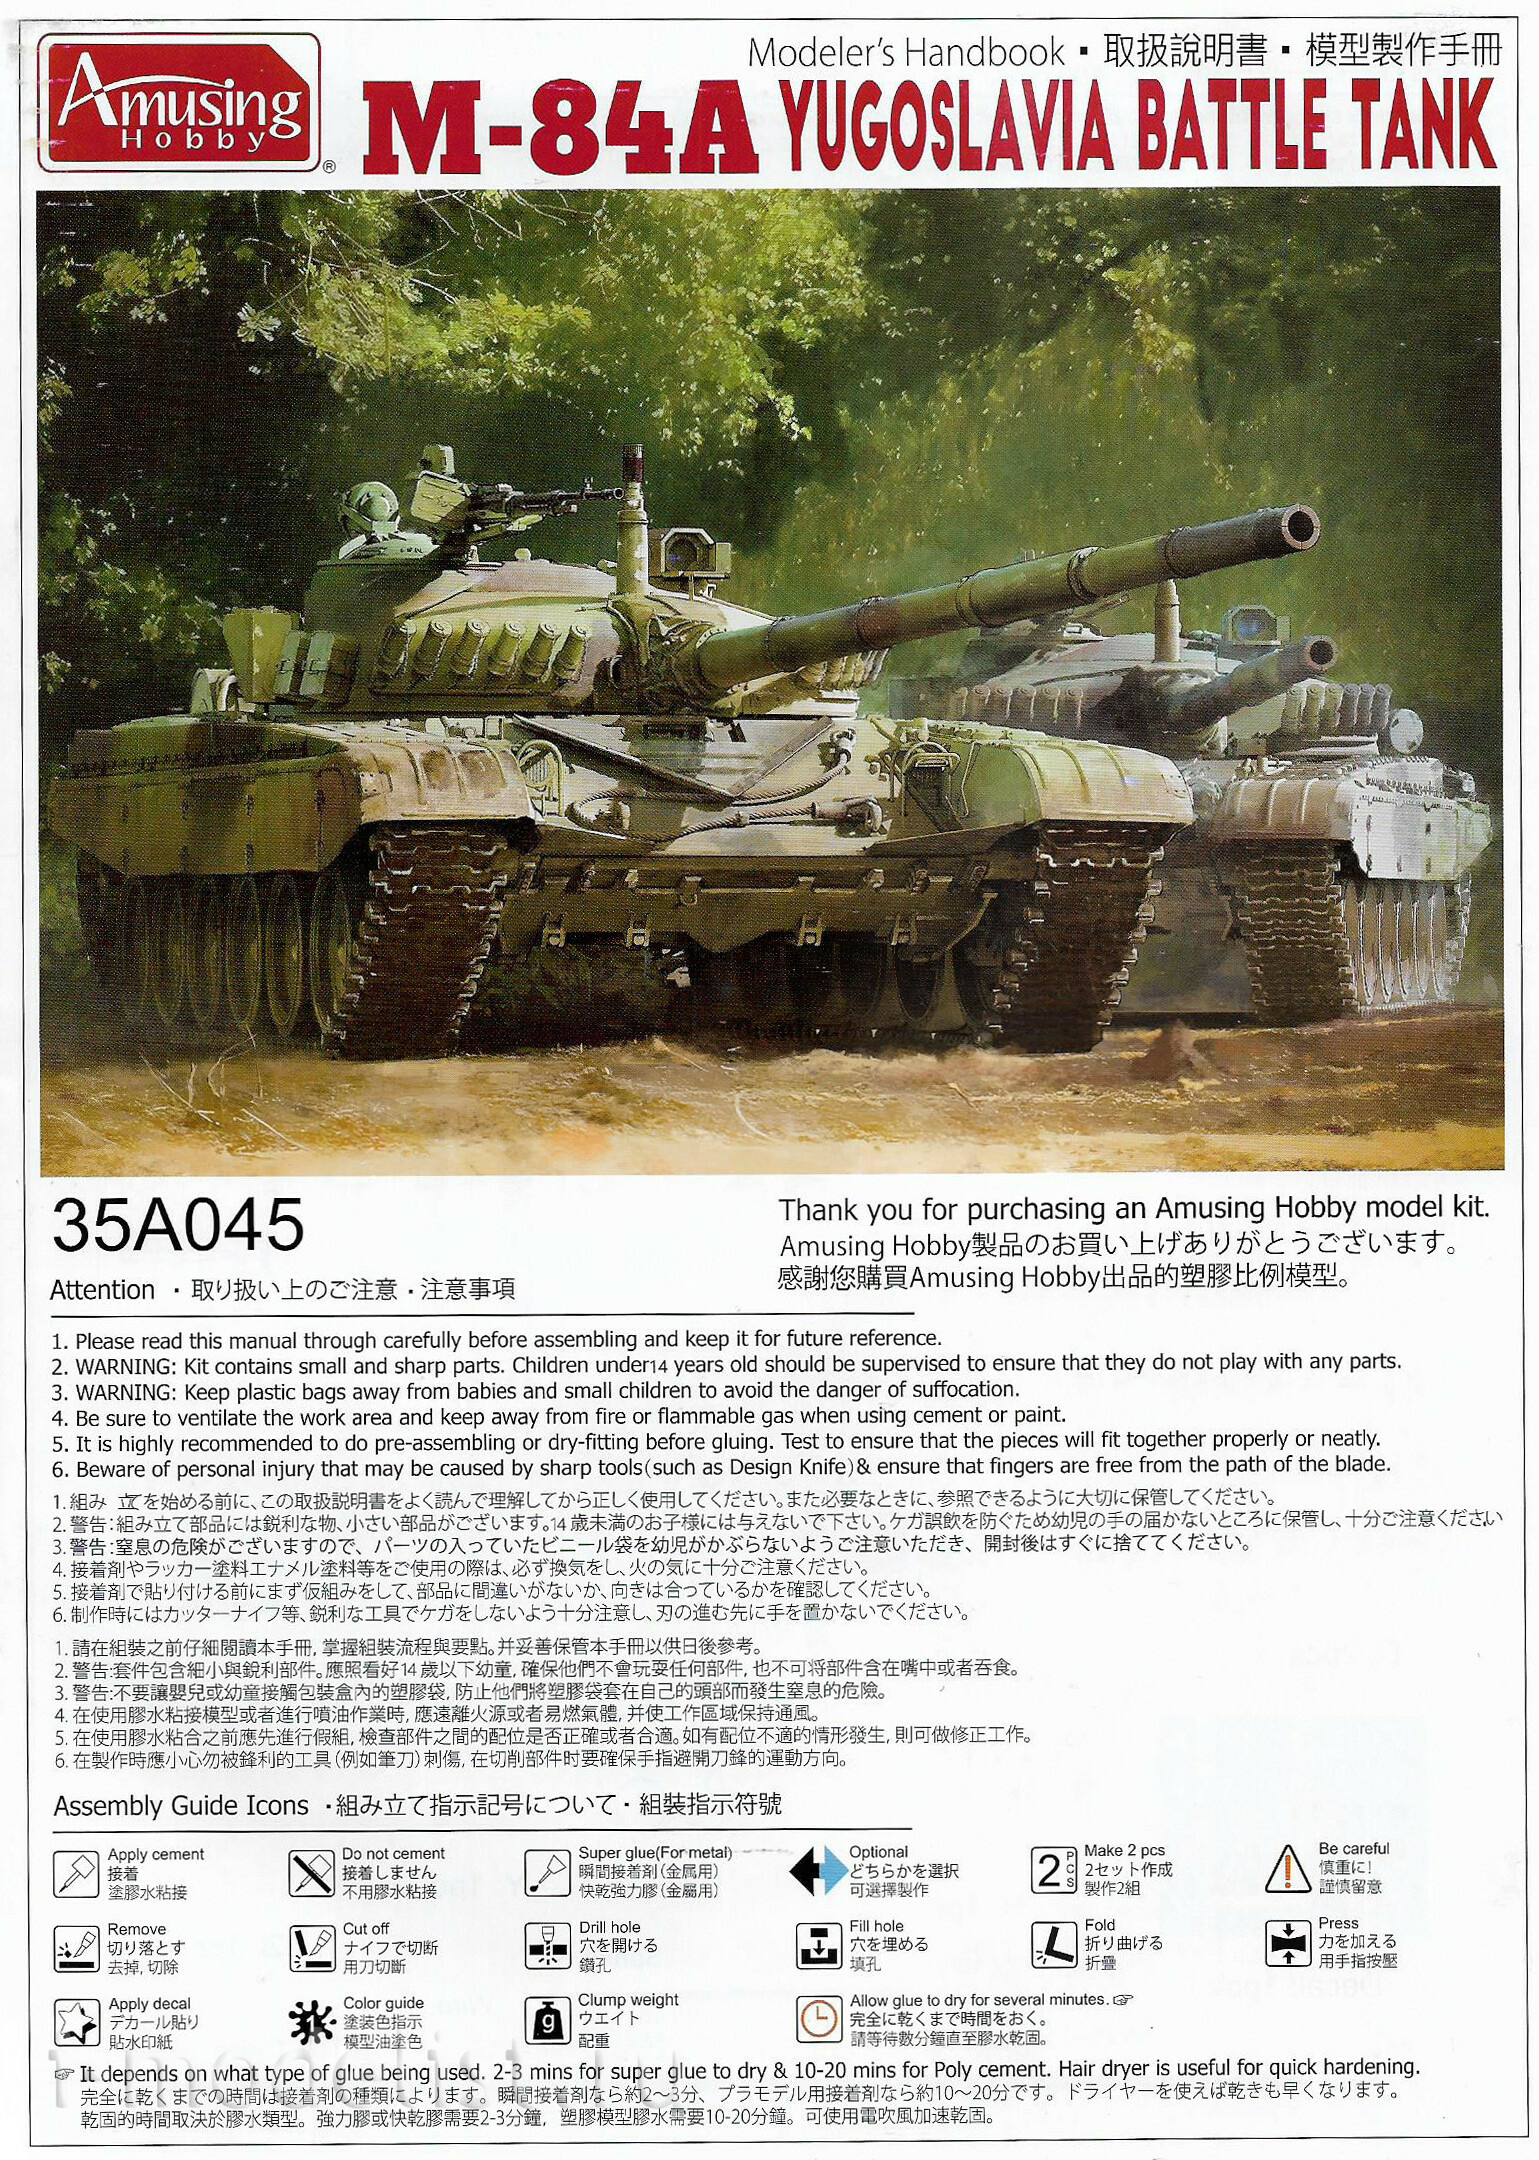 35A045 Amusing Hobby 1/35 Main Battle Tank of Yugoslavia M-84A